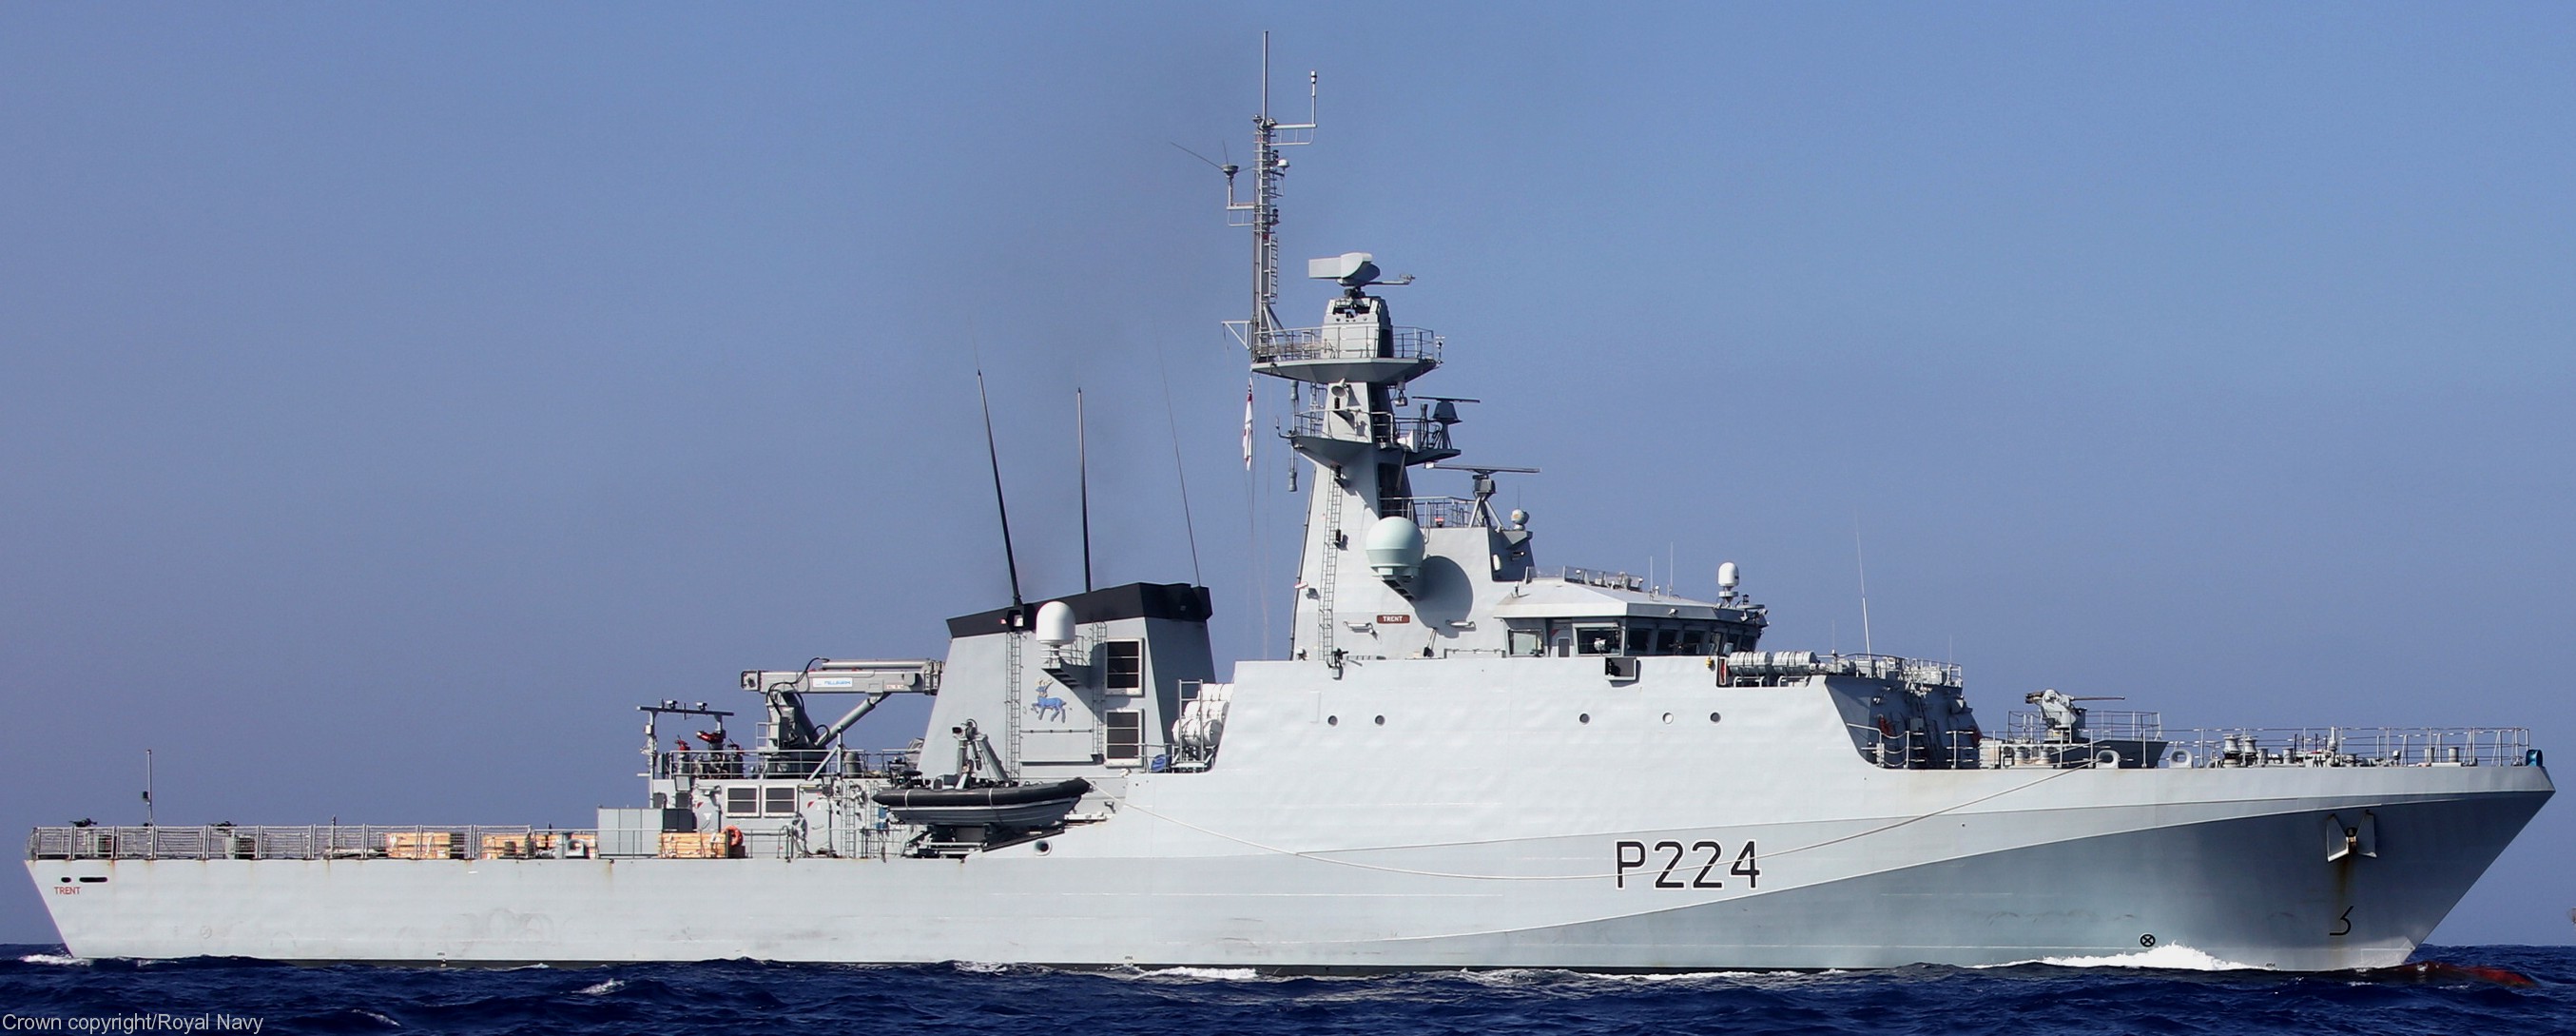 p224 hms trent river class offshore patrol vessel opv royal navy 16